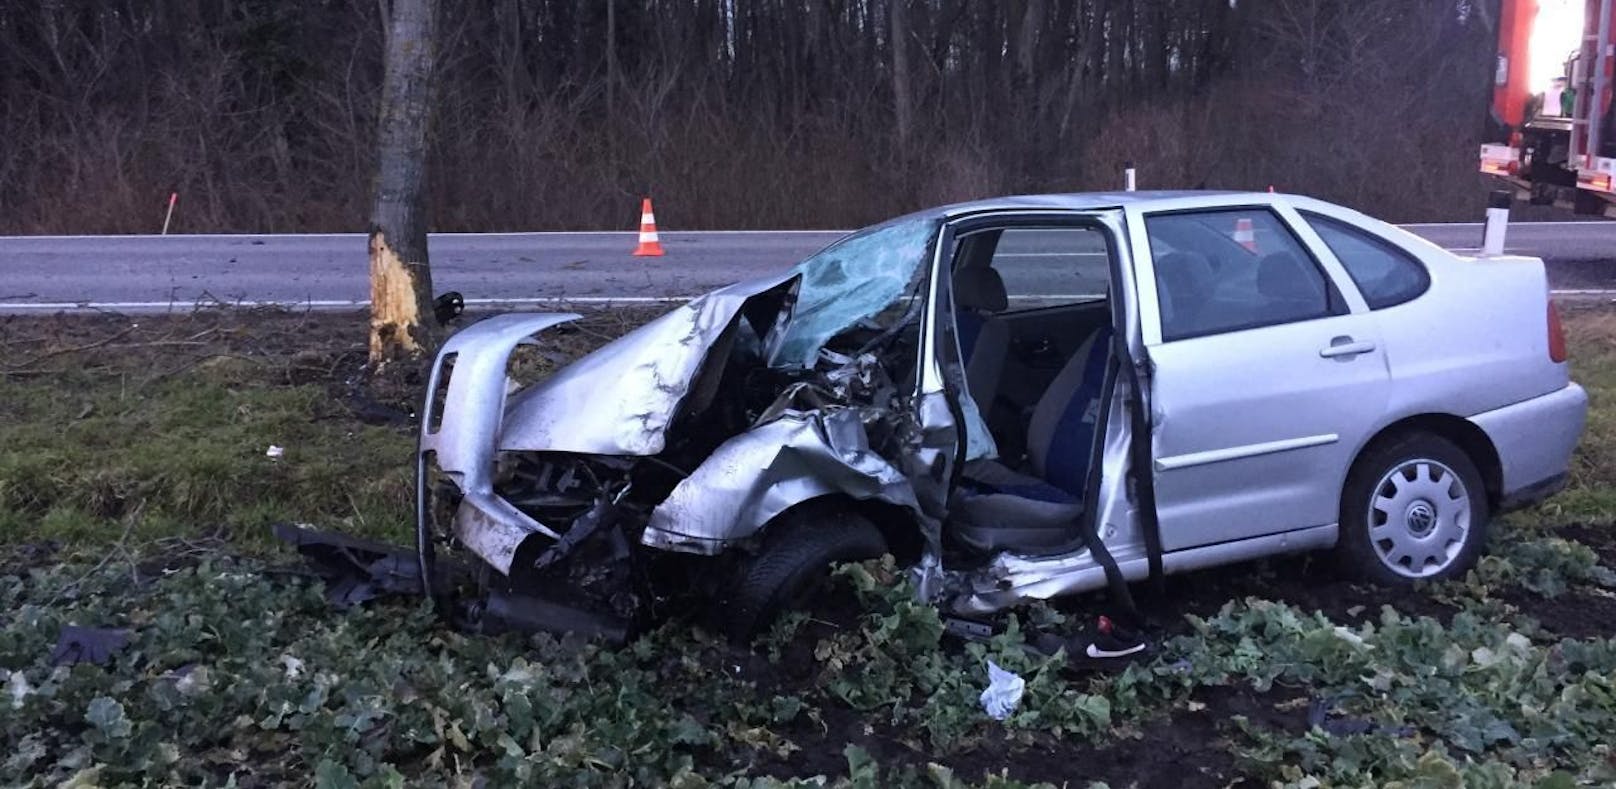 Auto frontal gegen Baum: Lenker (21) stirbt vor Ort